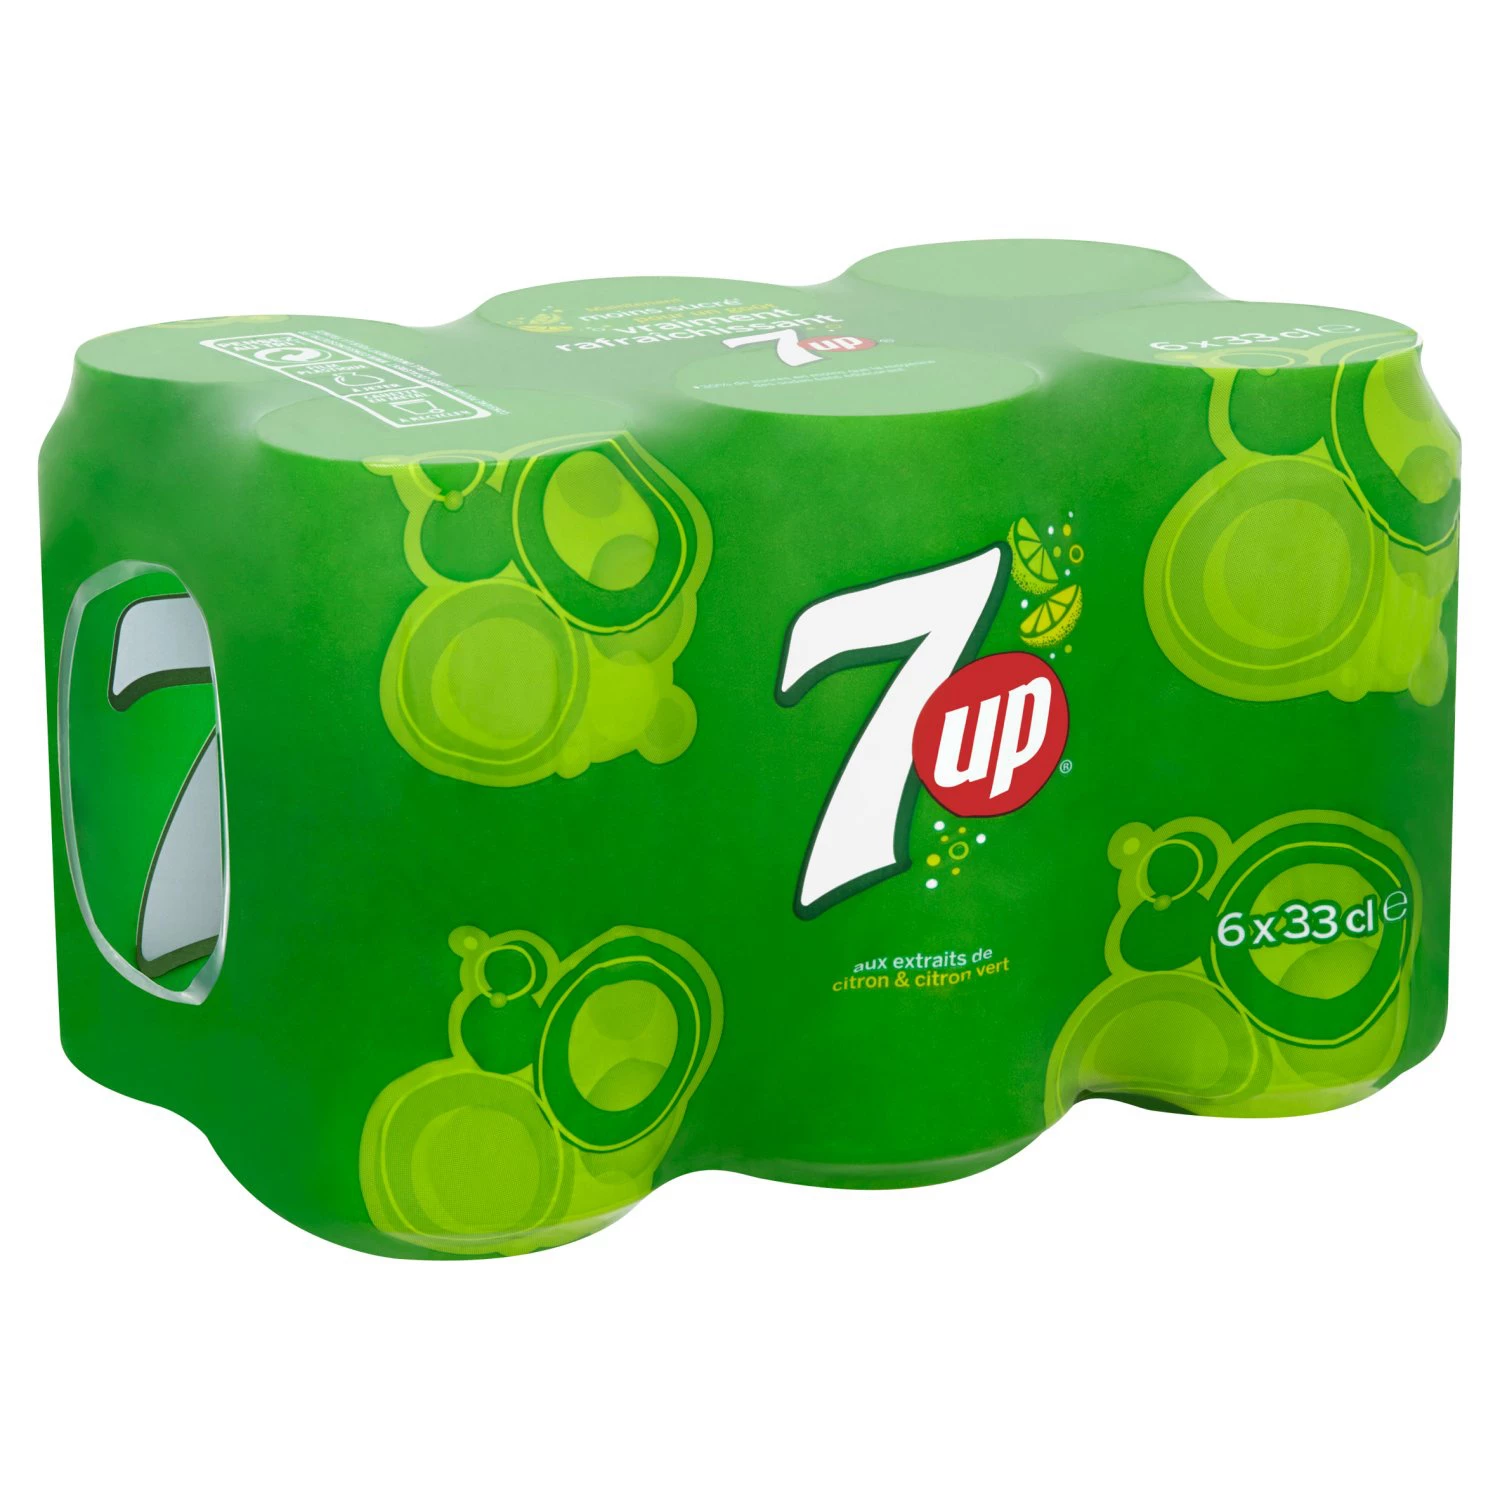 Soda Citron Vert, 6x33cl - SEVEN UP